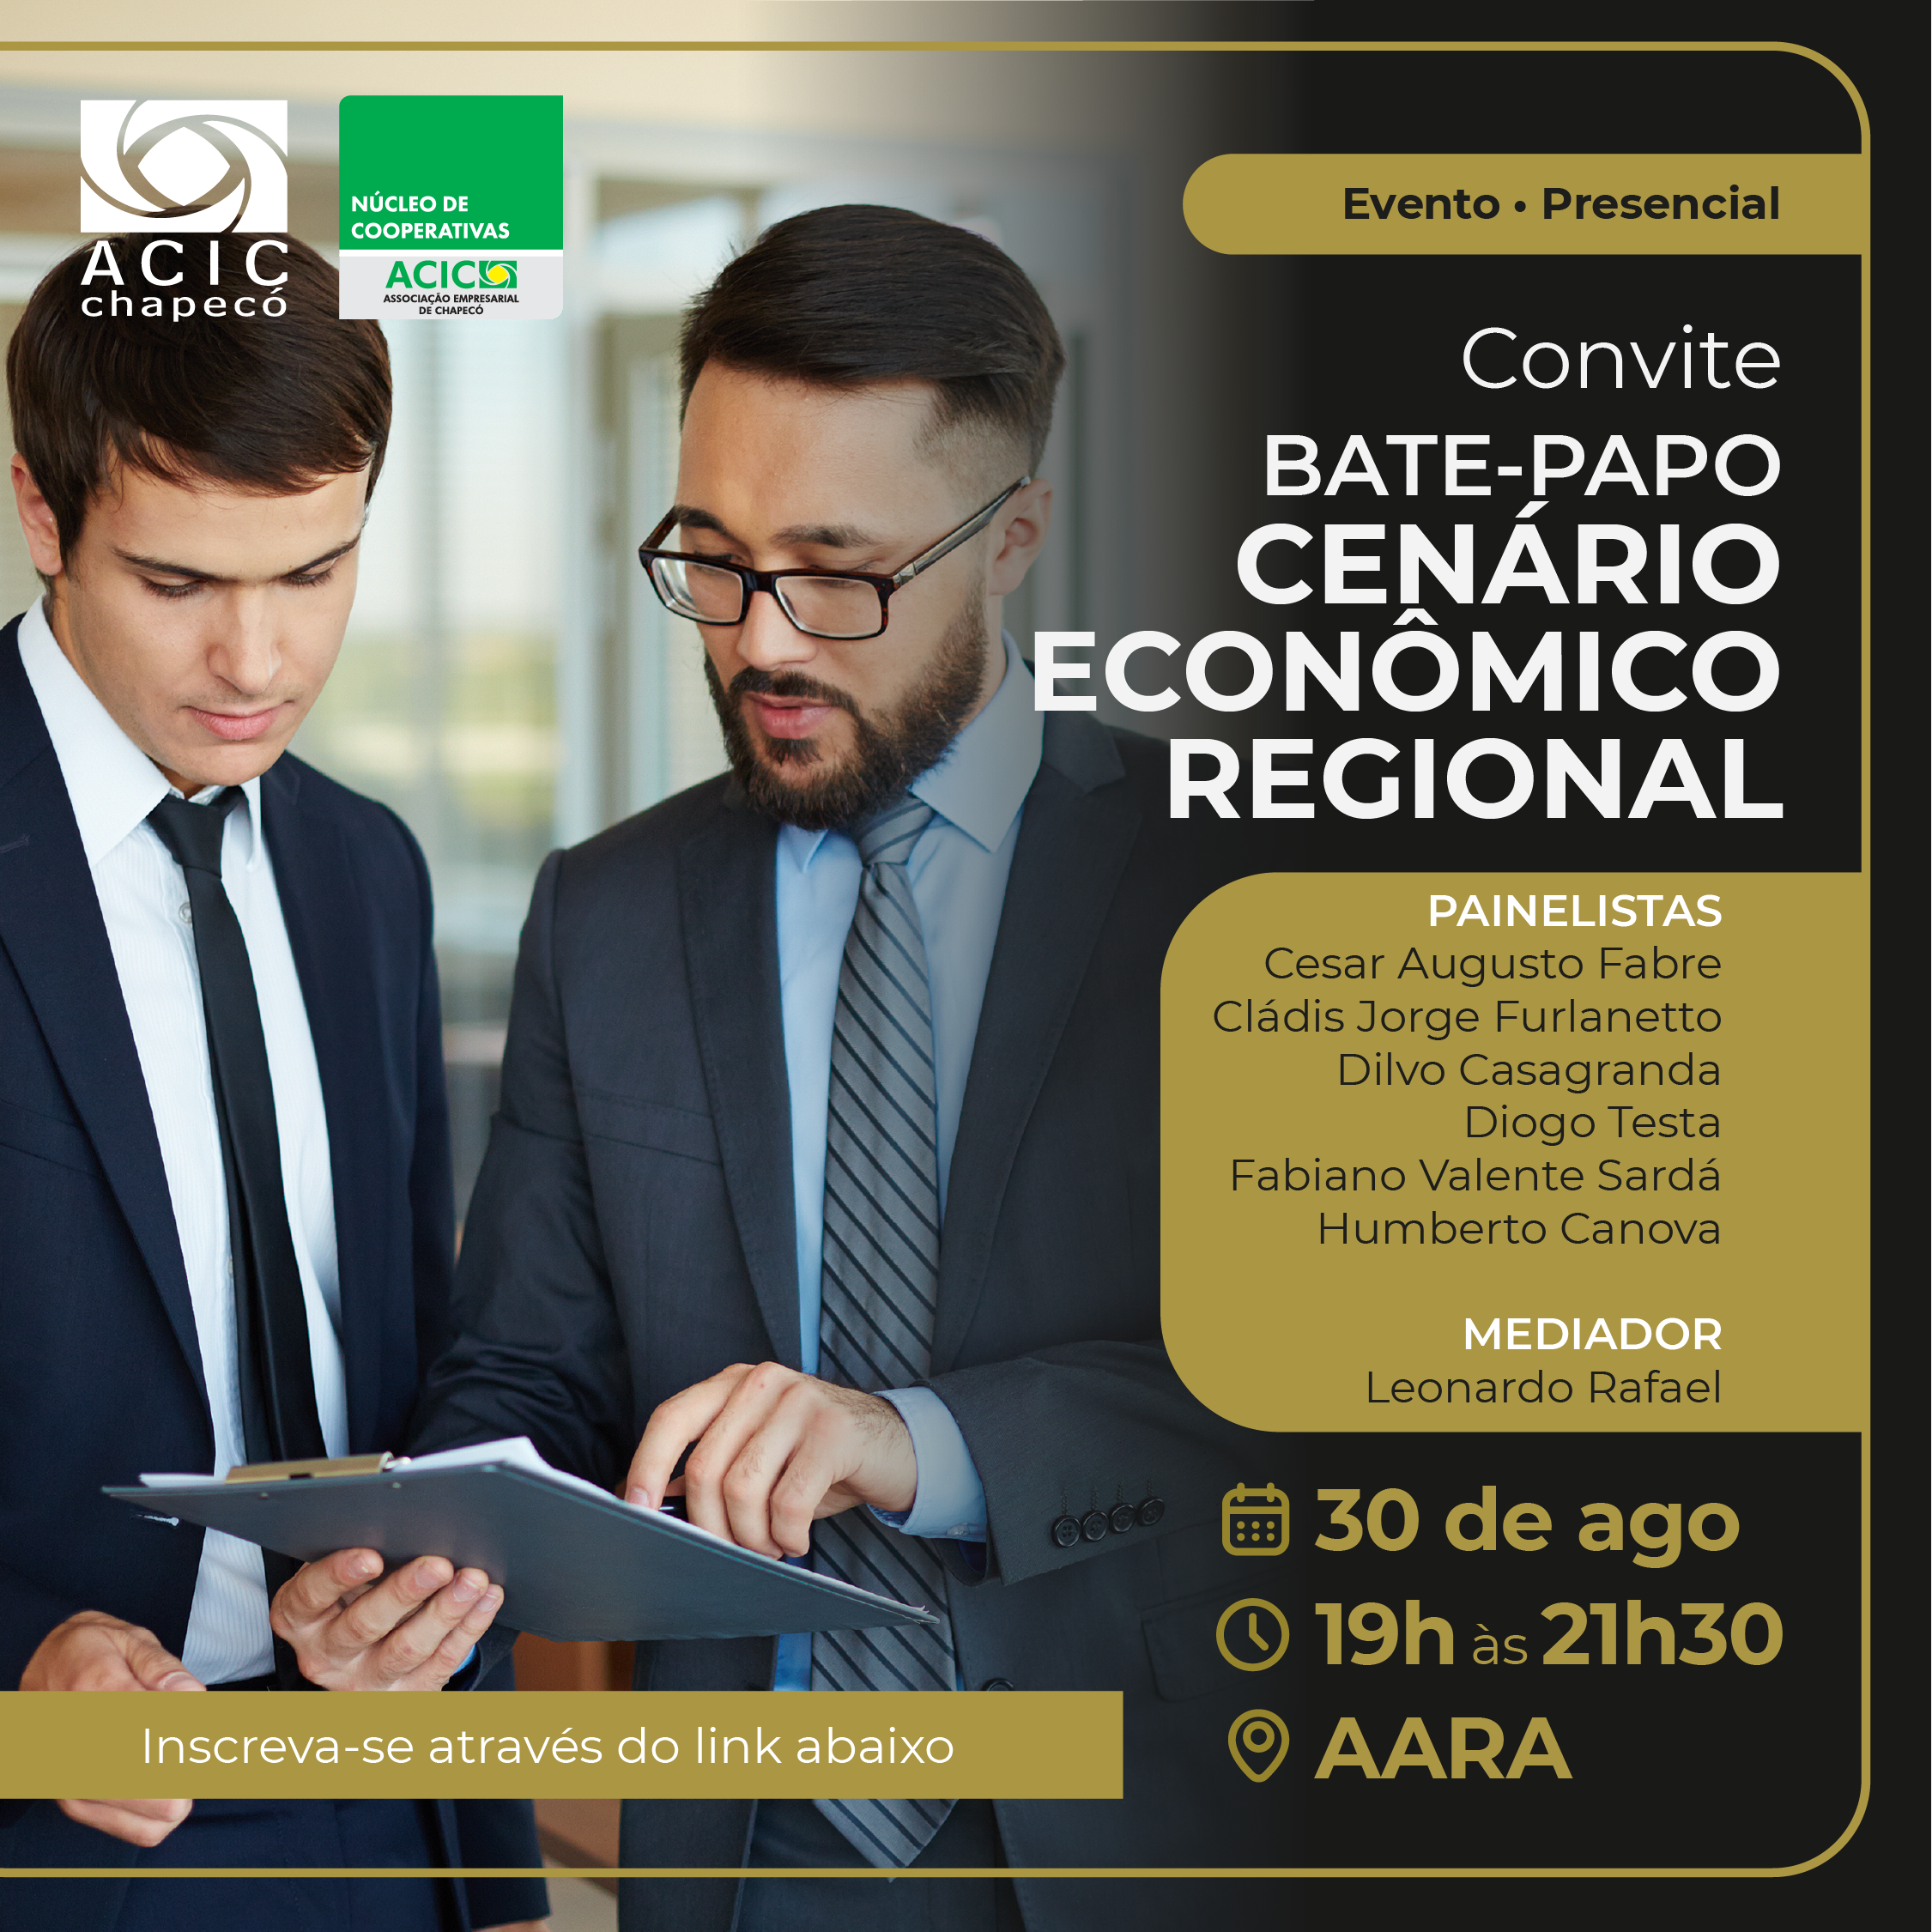 Bate-papo - Cenário Econômico Regional